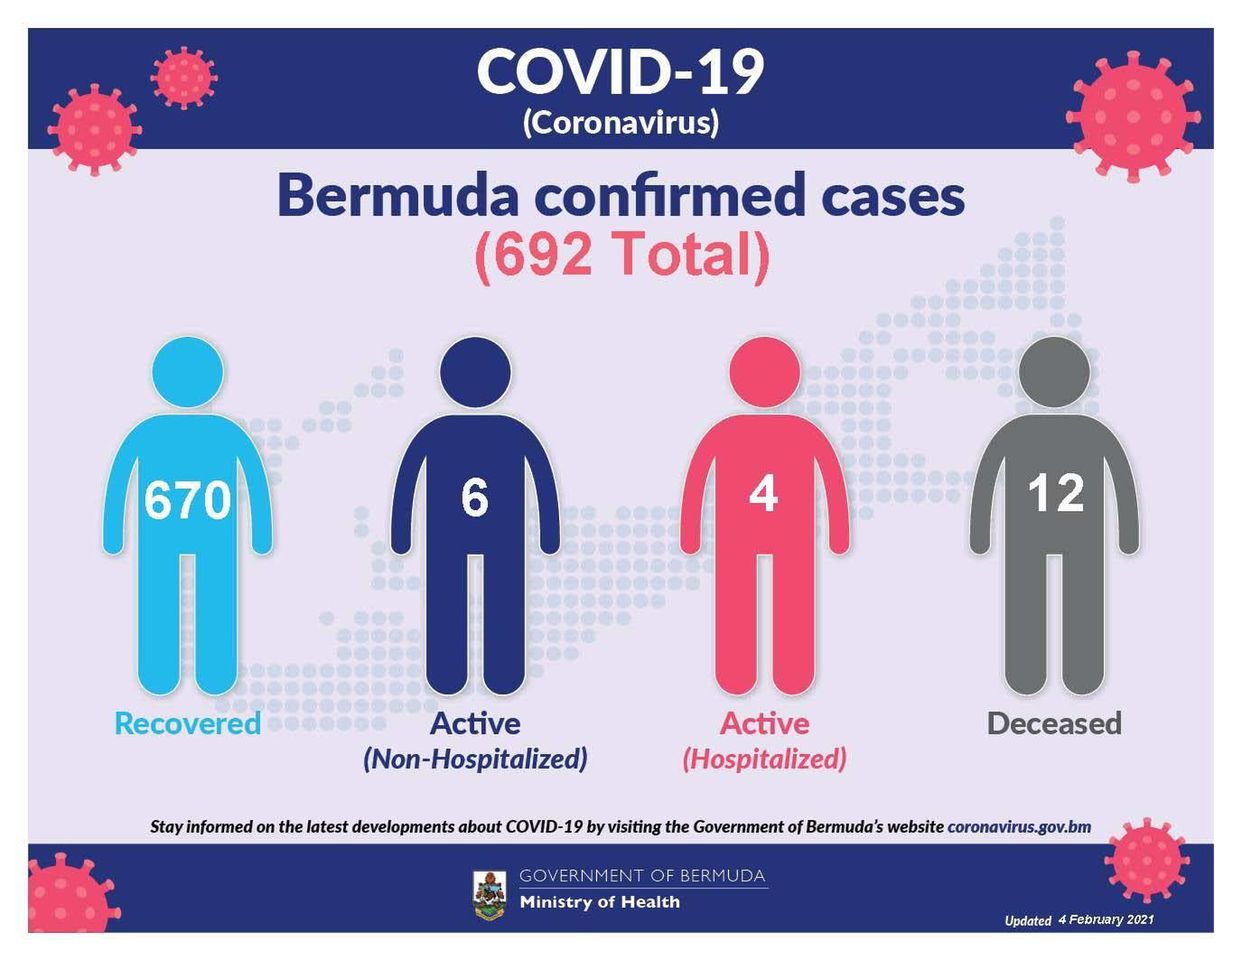 No new COVID-19 cases reported in Bermuda, Vaccination continues